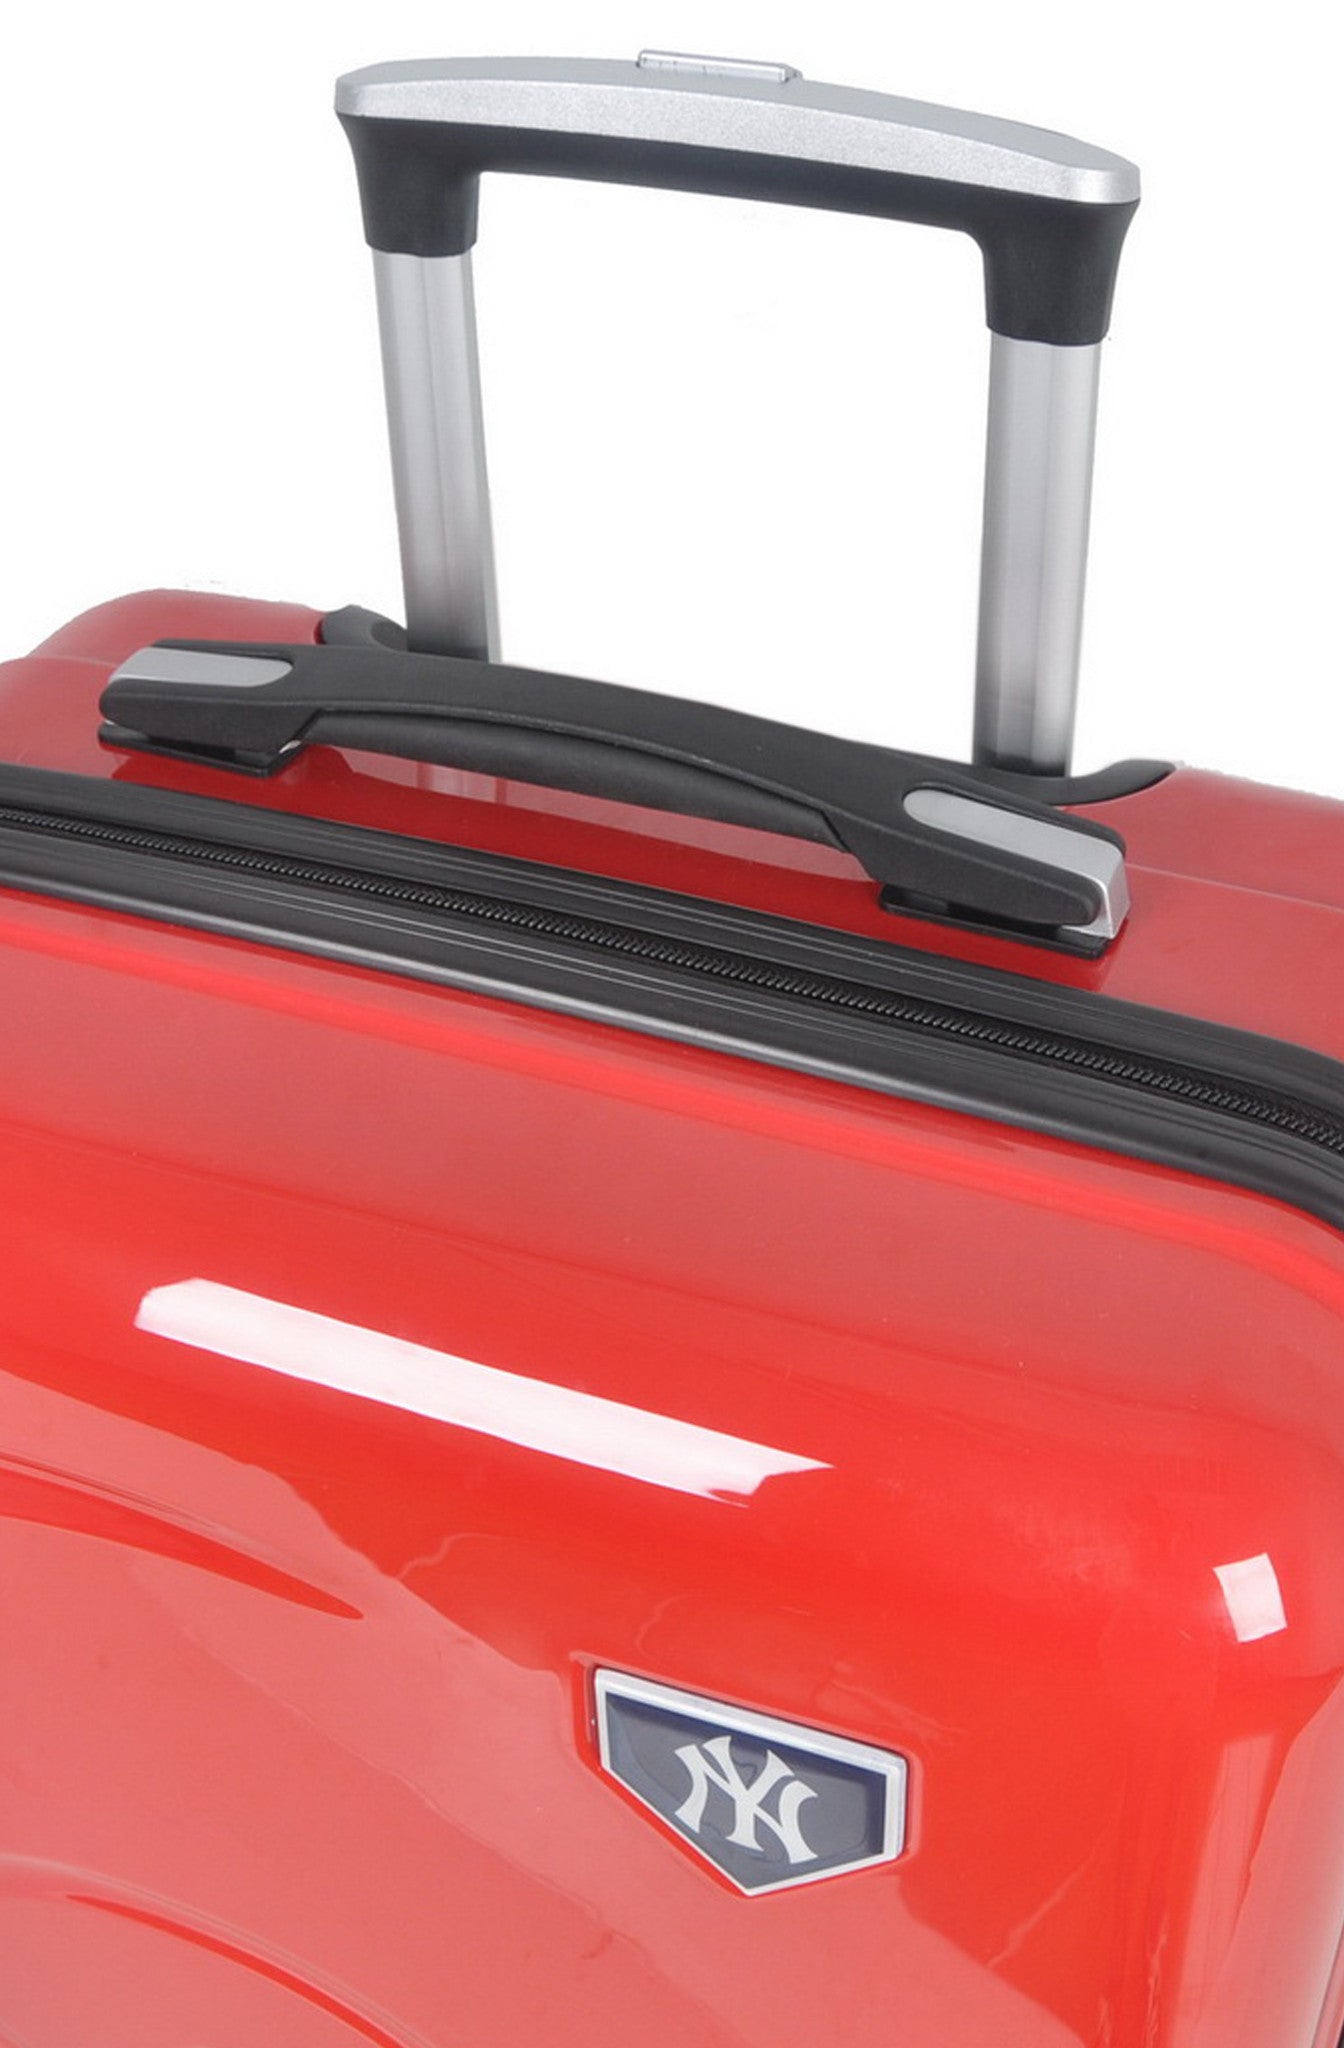 Texas Rangers, 19" Premium Molded Luggage by Kaybull #TEX-19PCF-IFD - OBM Distribution, Inc.